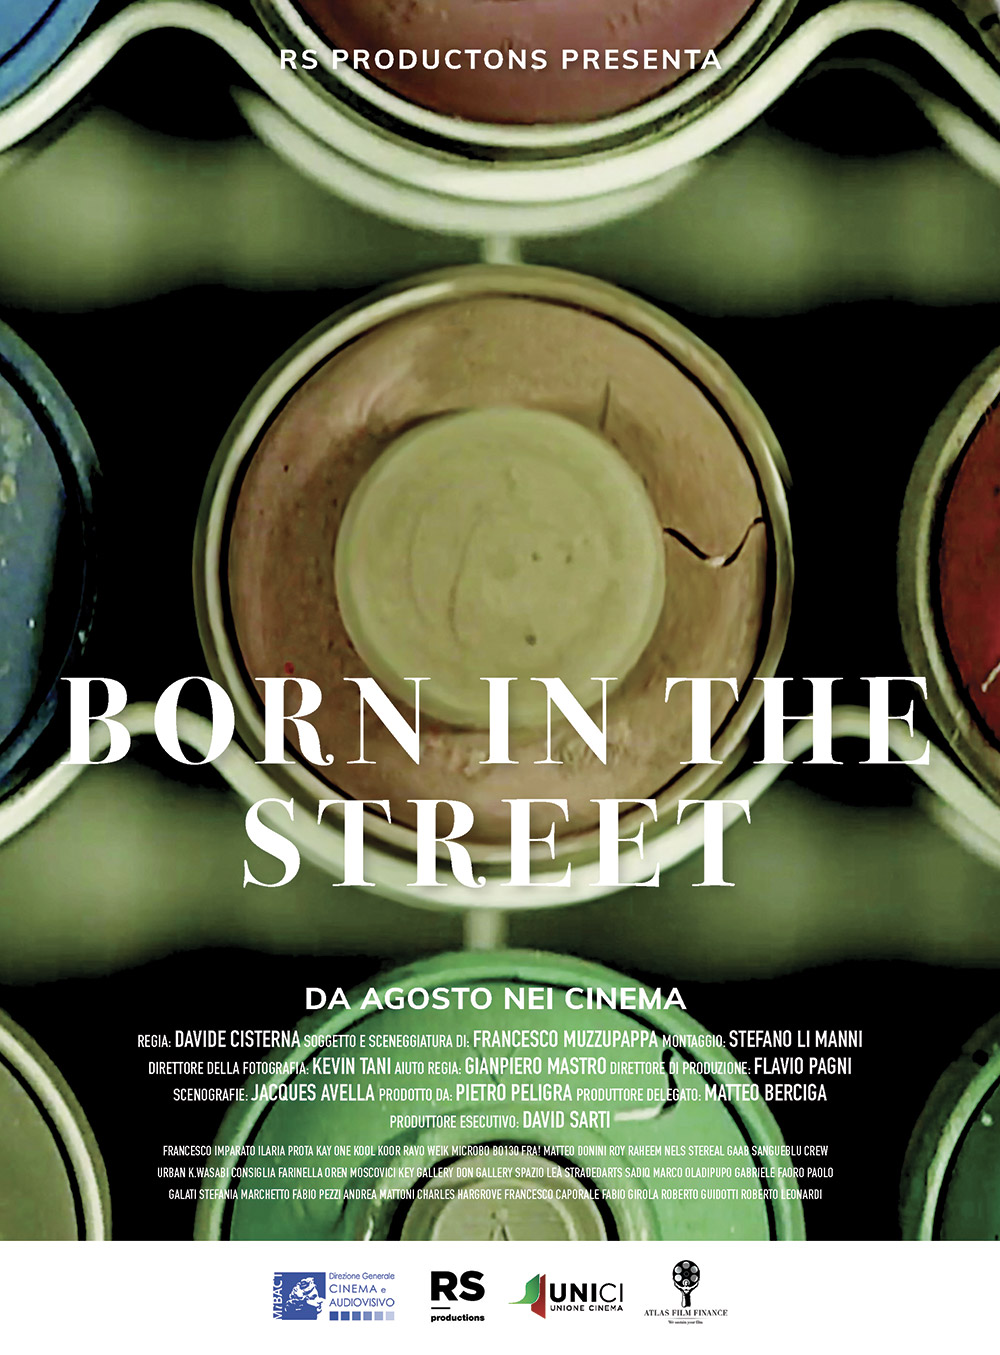 Born in the street